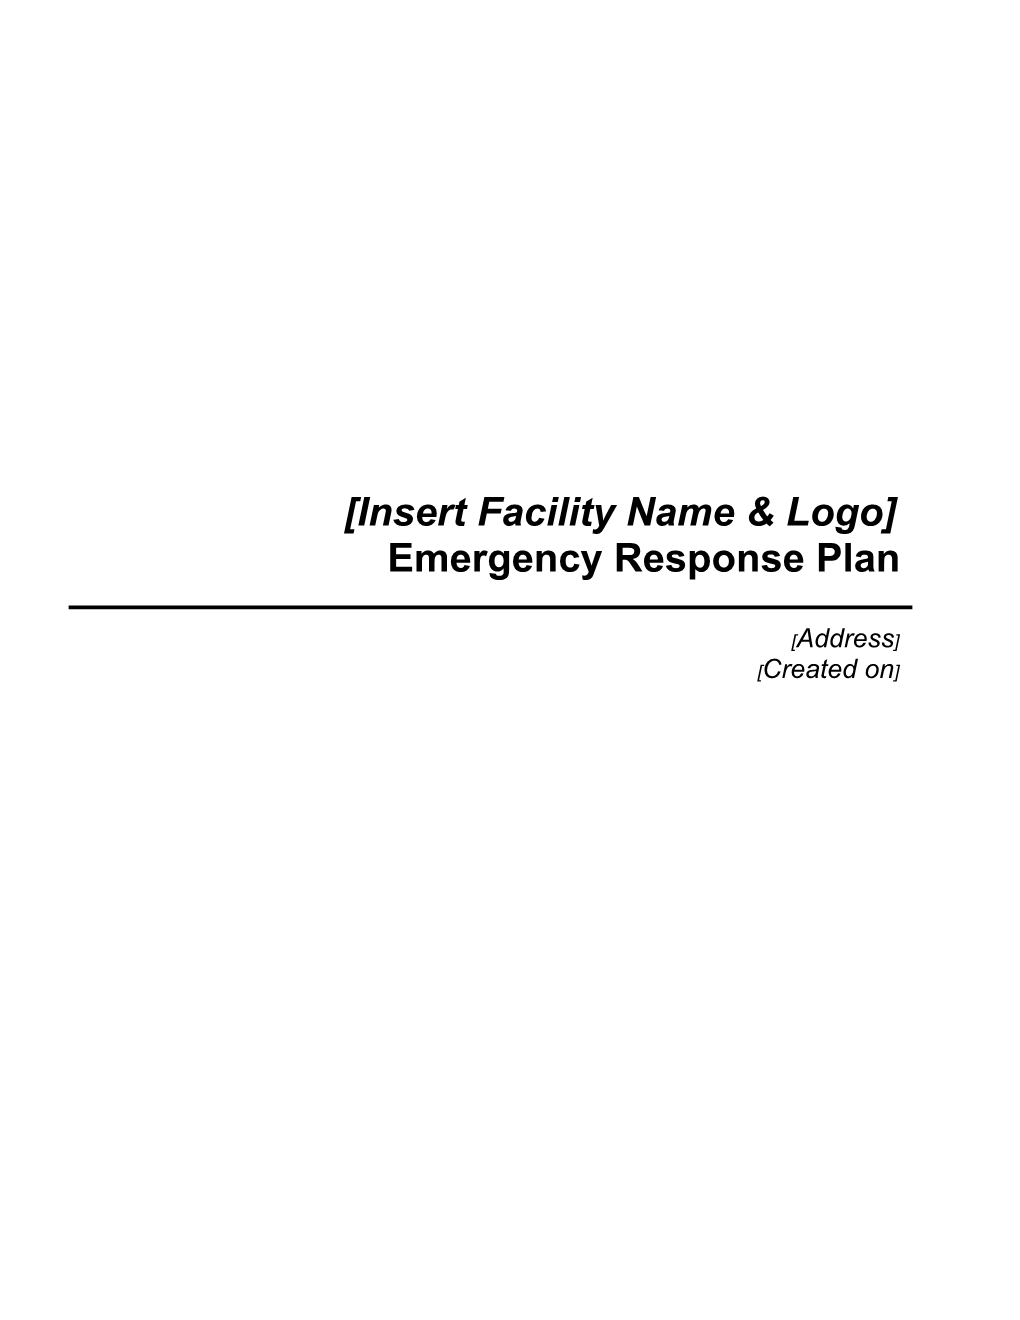 Insert Facility Name & Logo